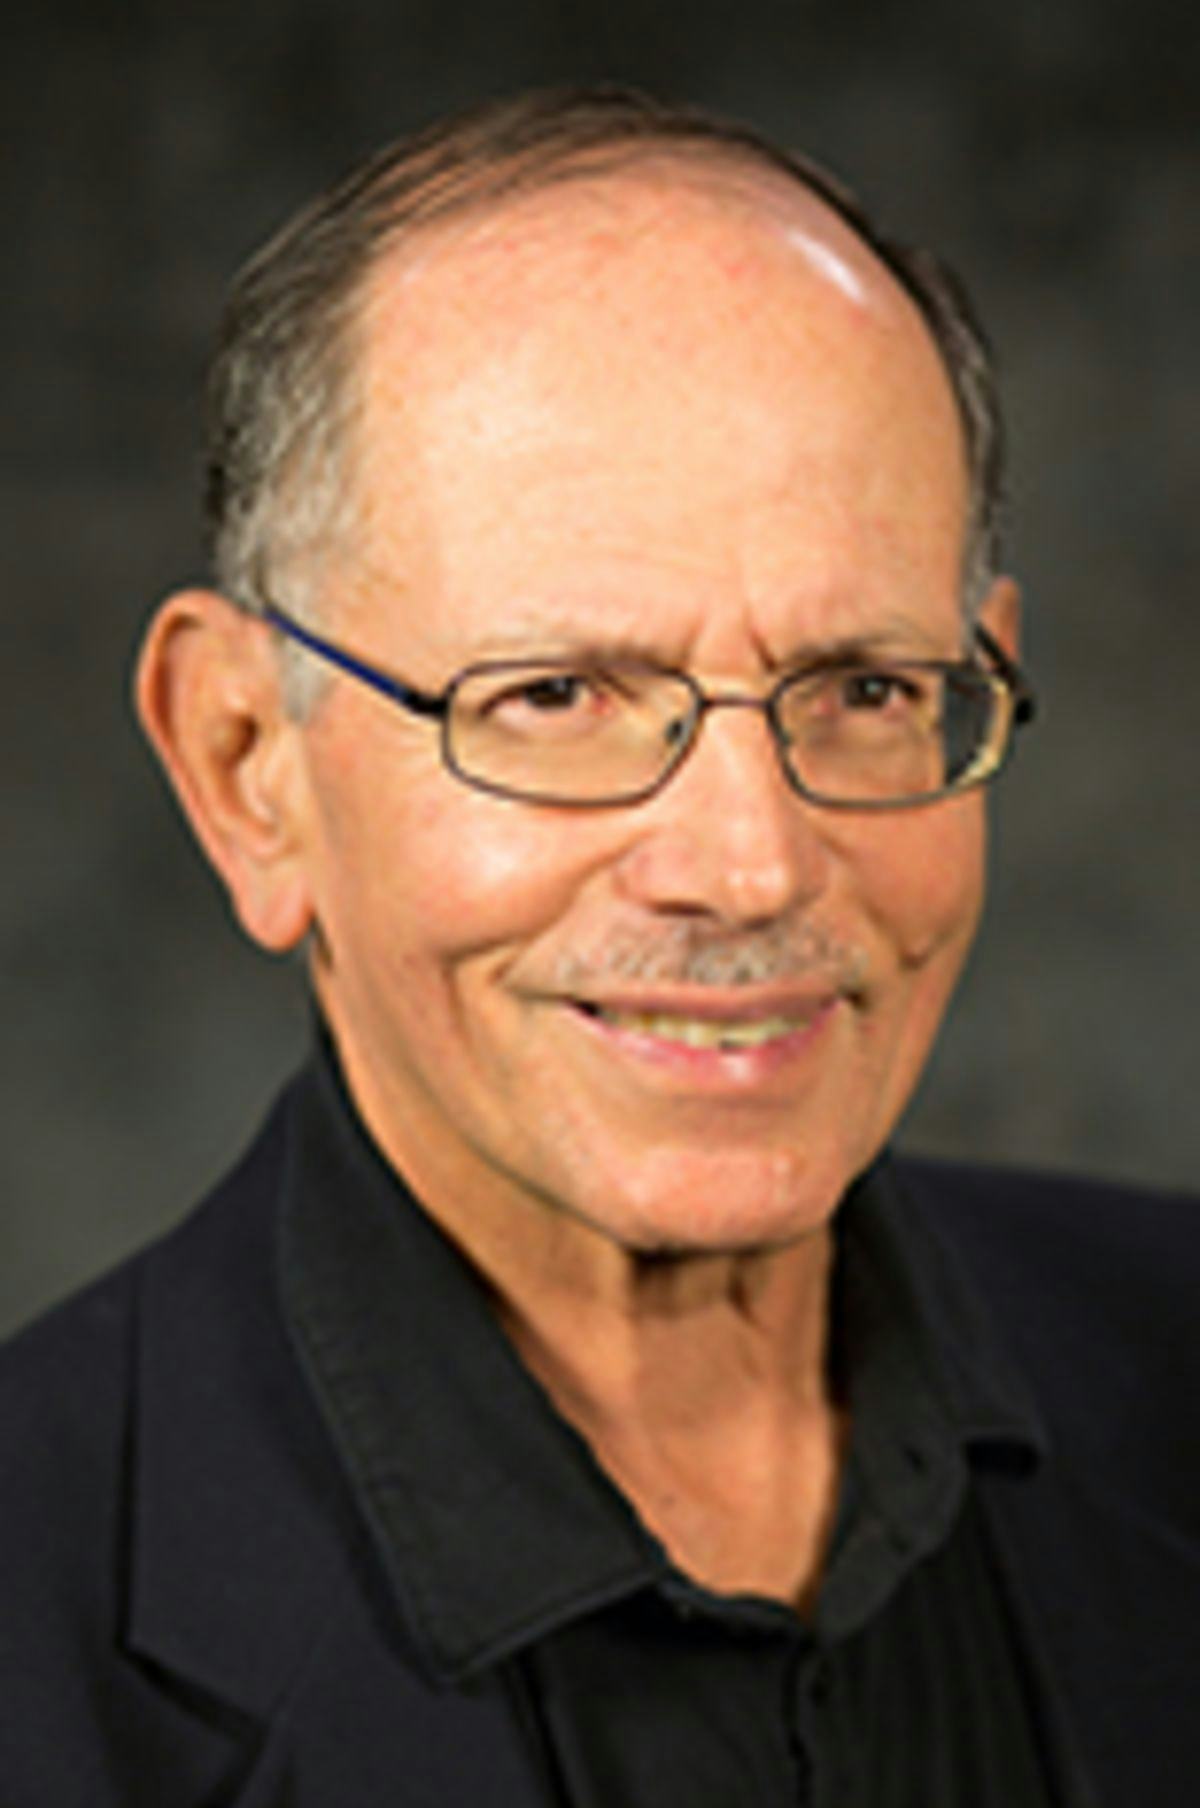 Dr. Gary Lilien